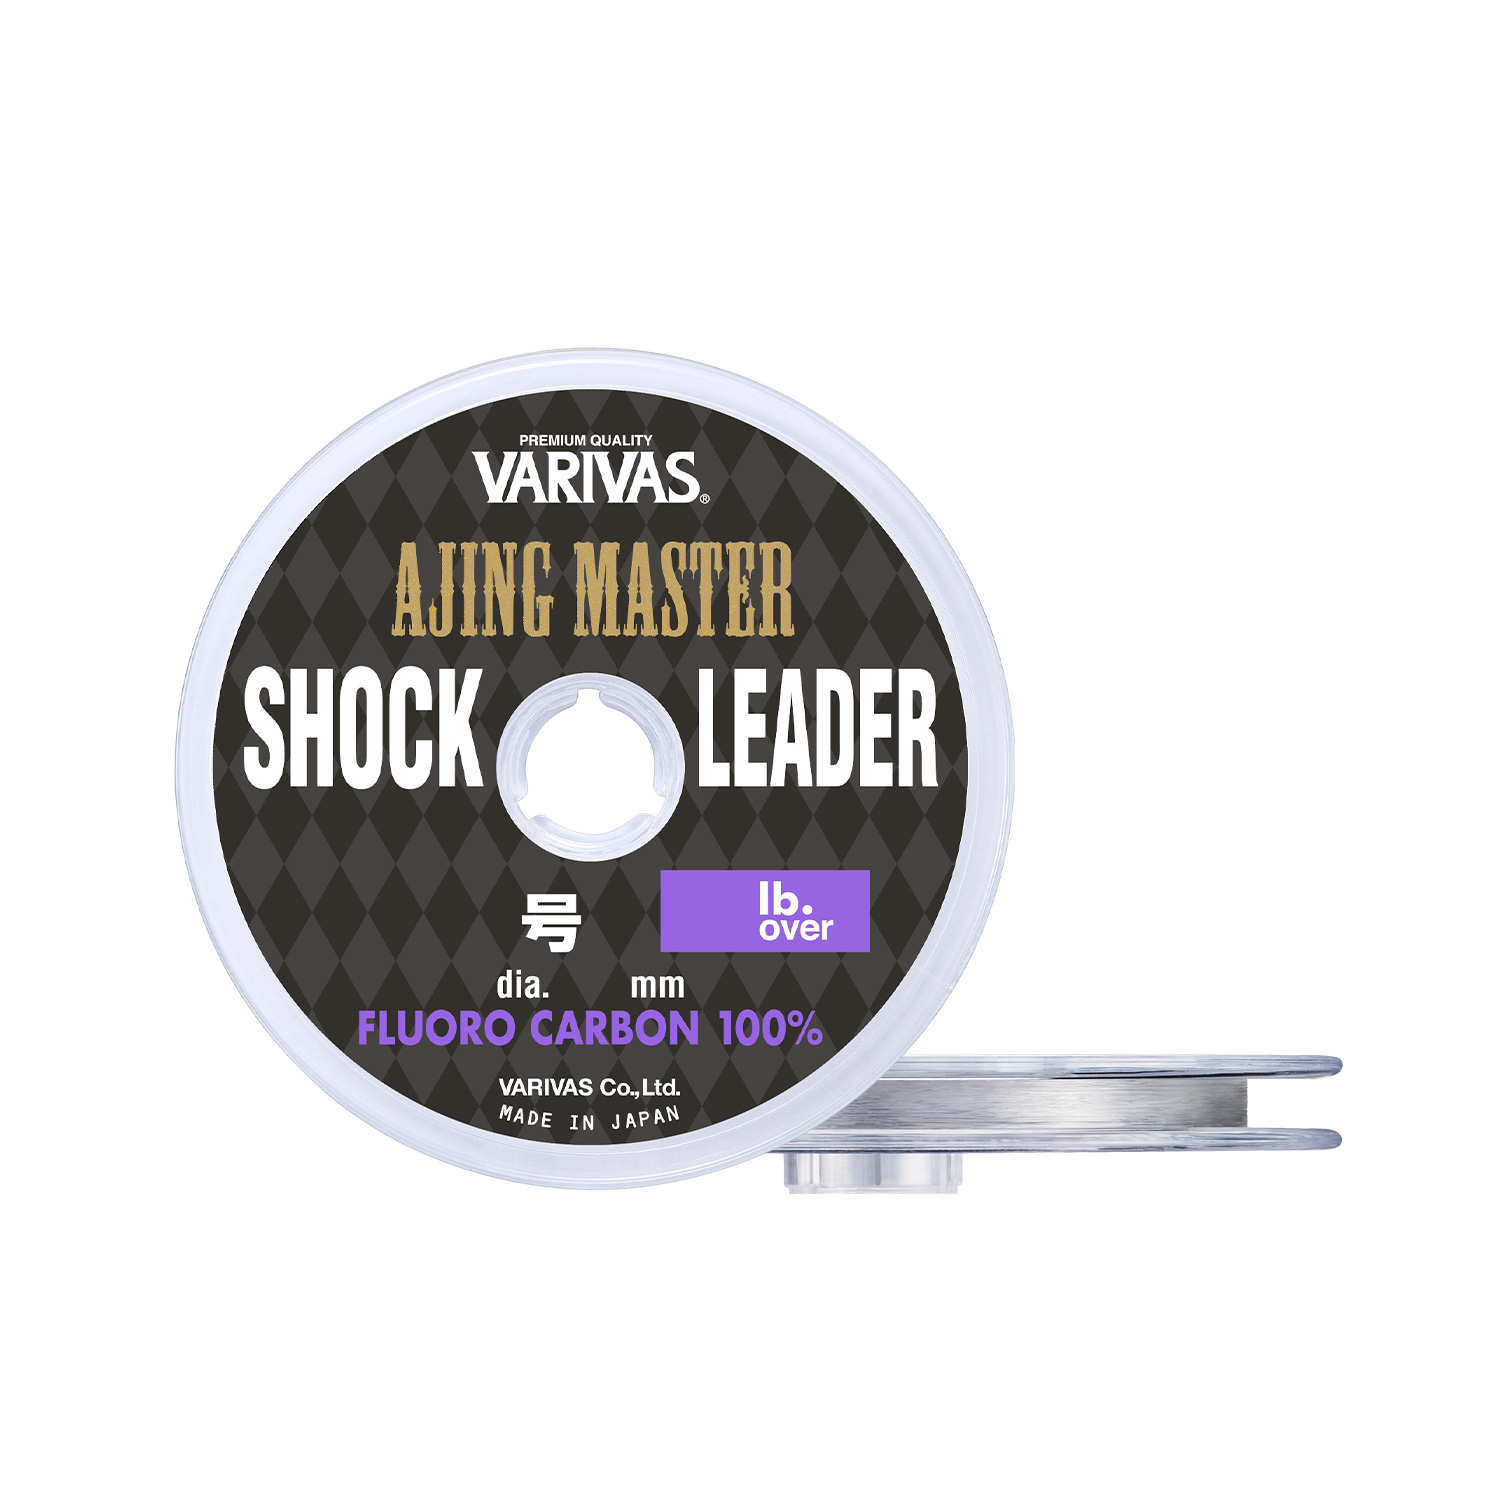 Ajing Master Shock Leader [Fluorocarbon]